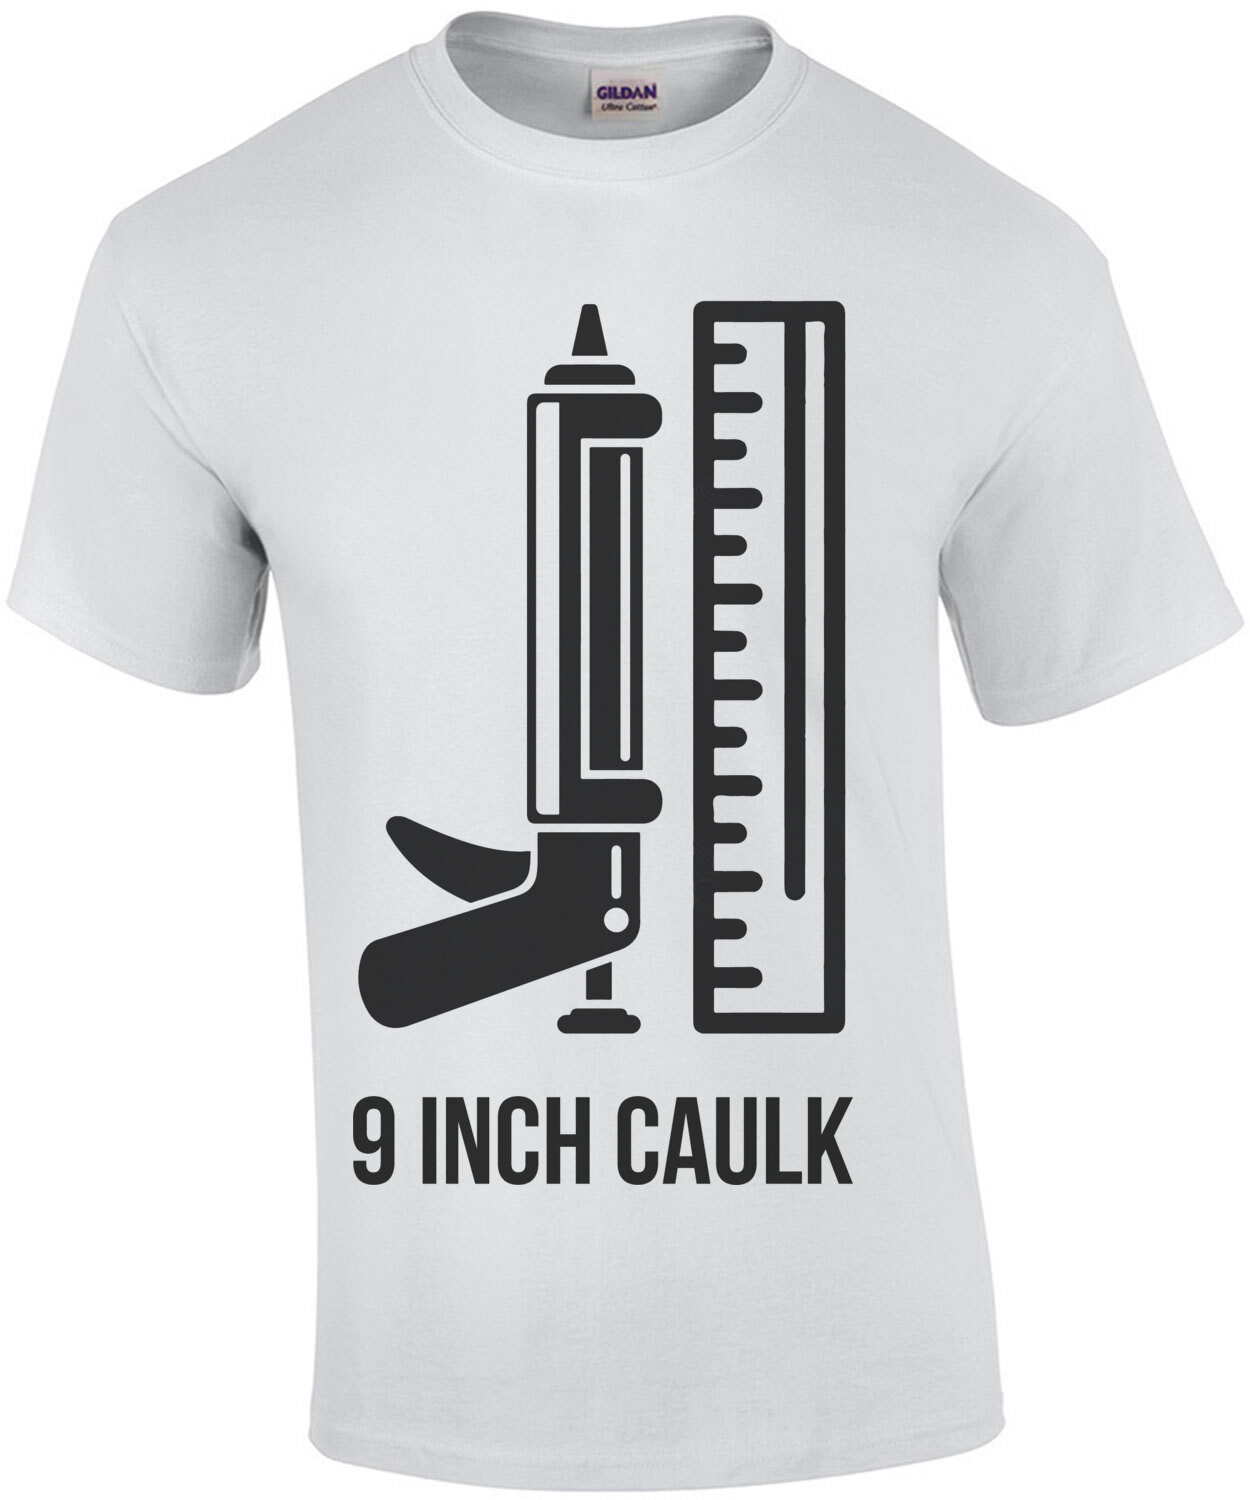 9 Inch Caulk - Funny Sexual Offensive T-Shirt